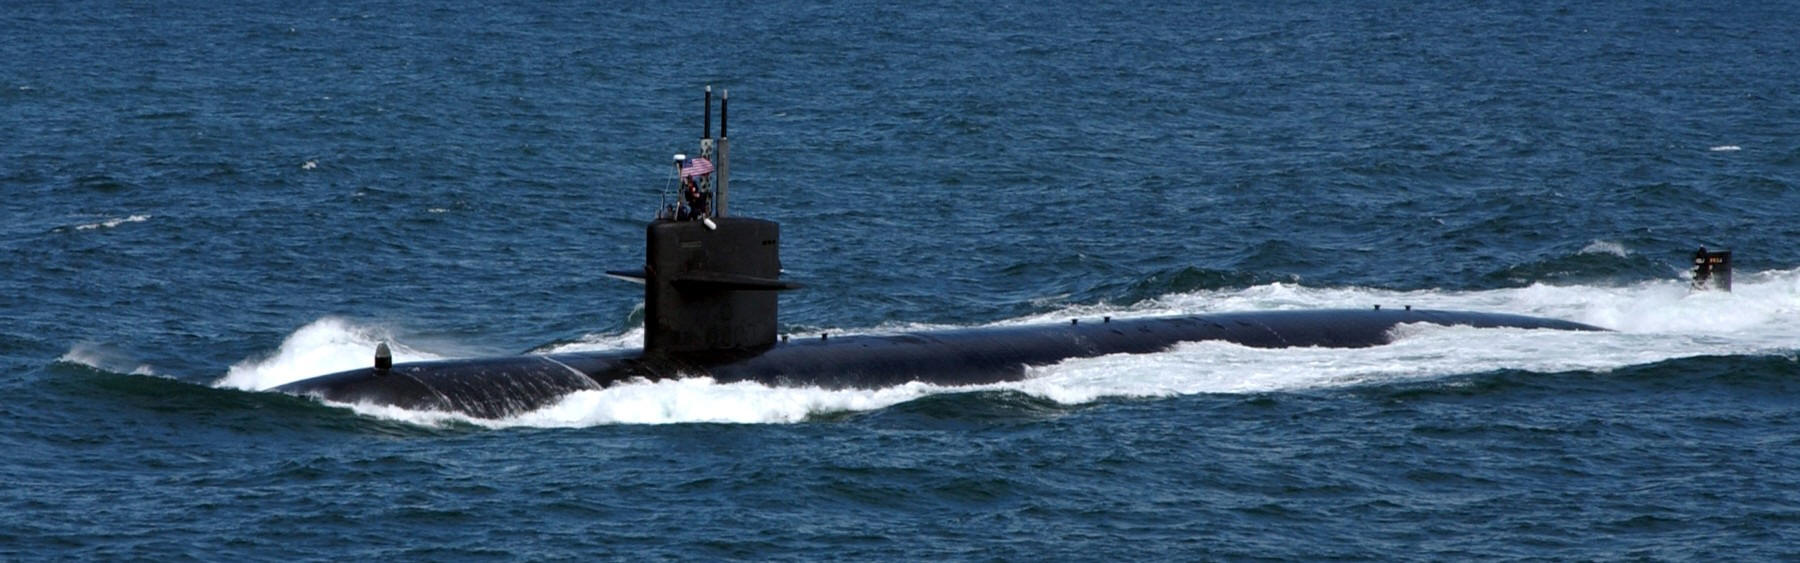 ssn-716 uss salt lake city los angeles class attack submarine